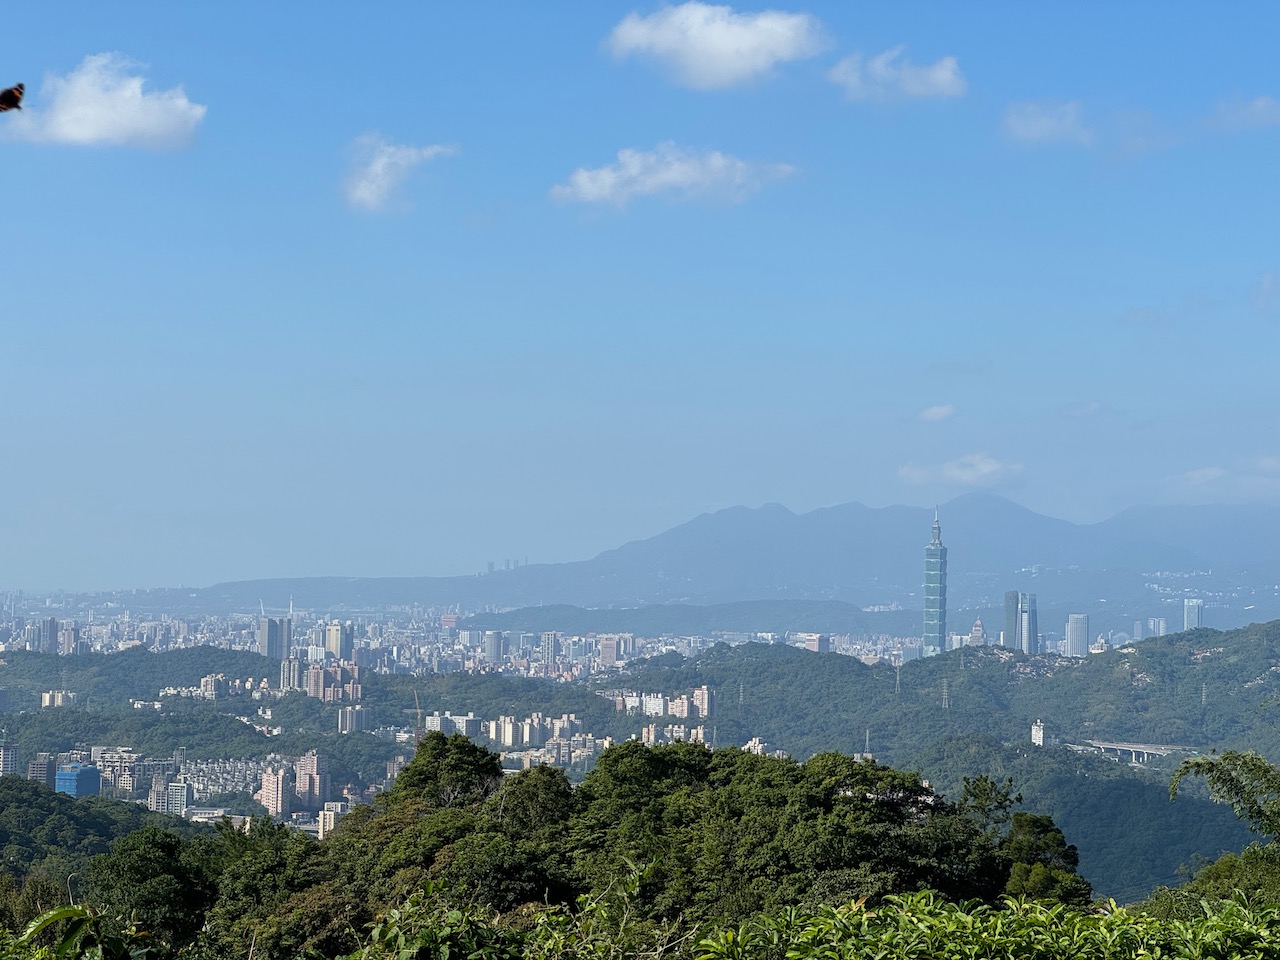 View of Taipei from Zhangshan temple near the Maokong gondola